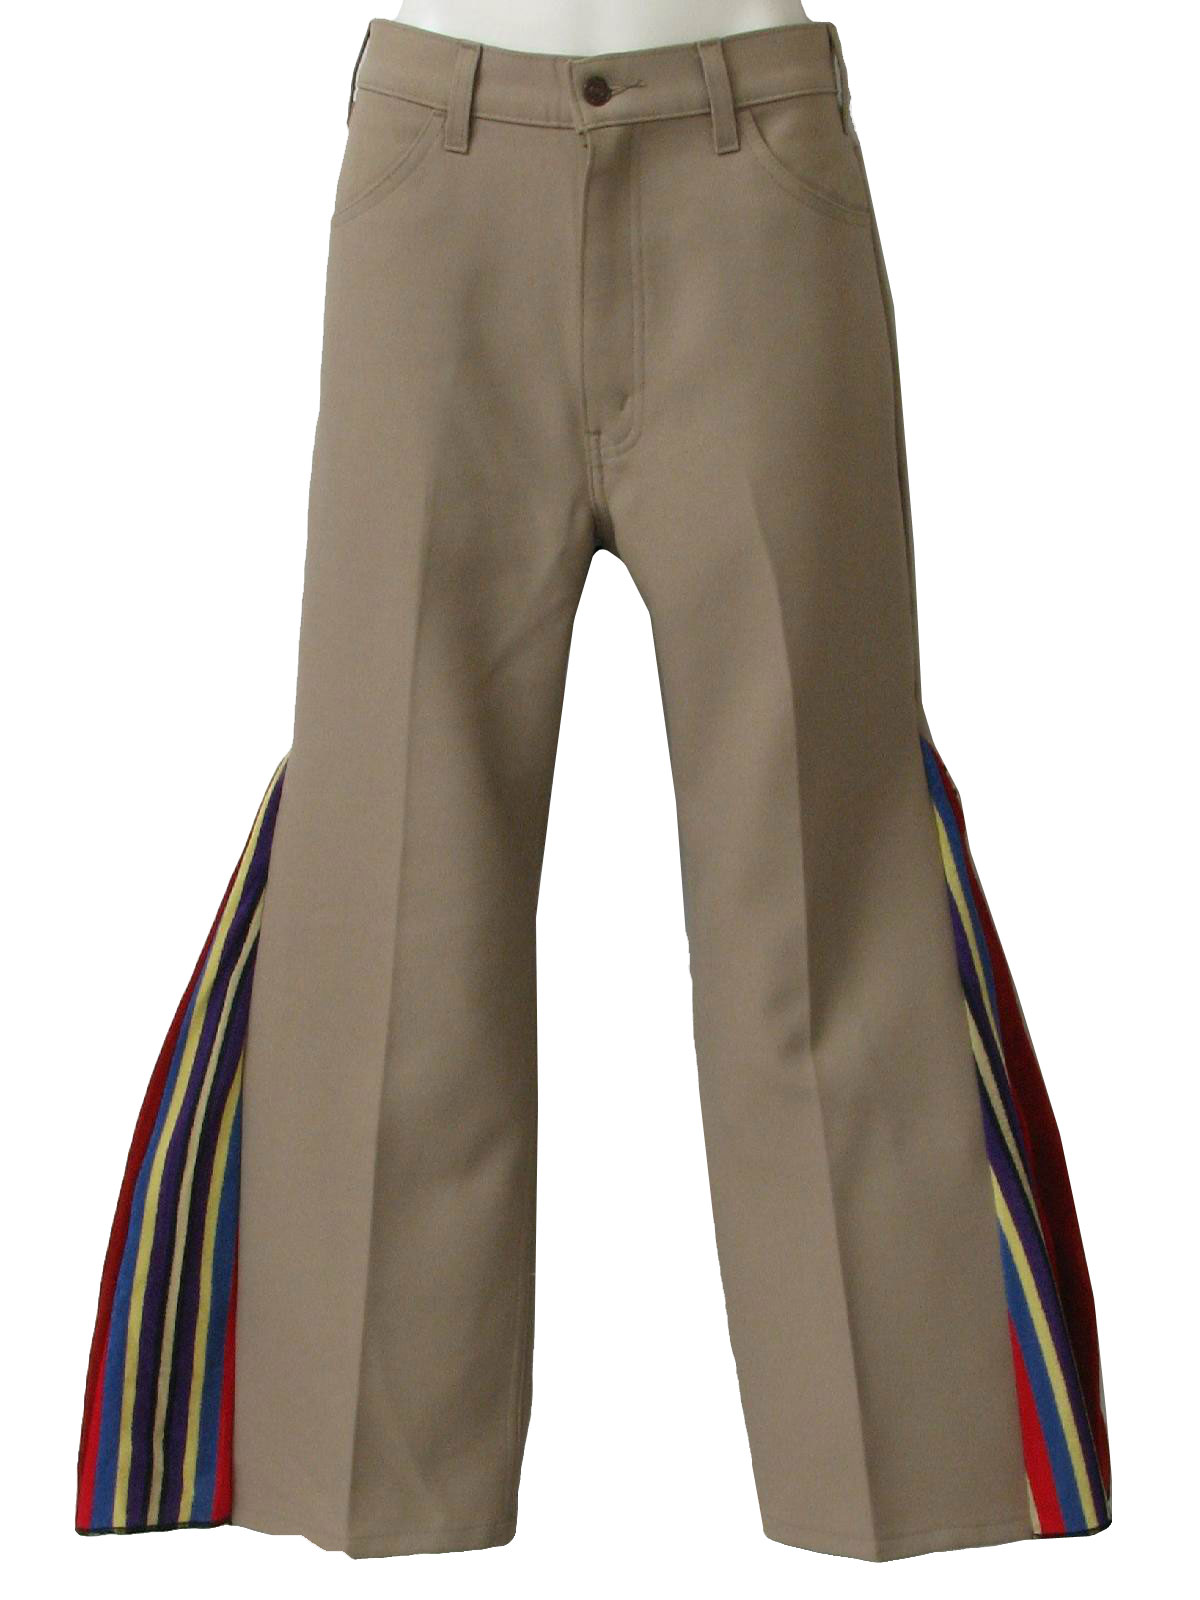 70s Retro Bellbottom Pants: 70s -Levis- Mens tan cotton polyester